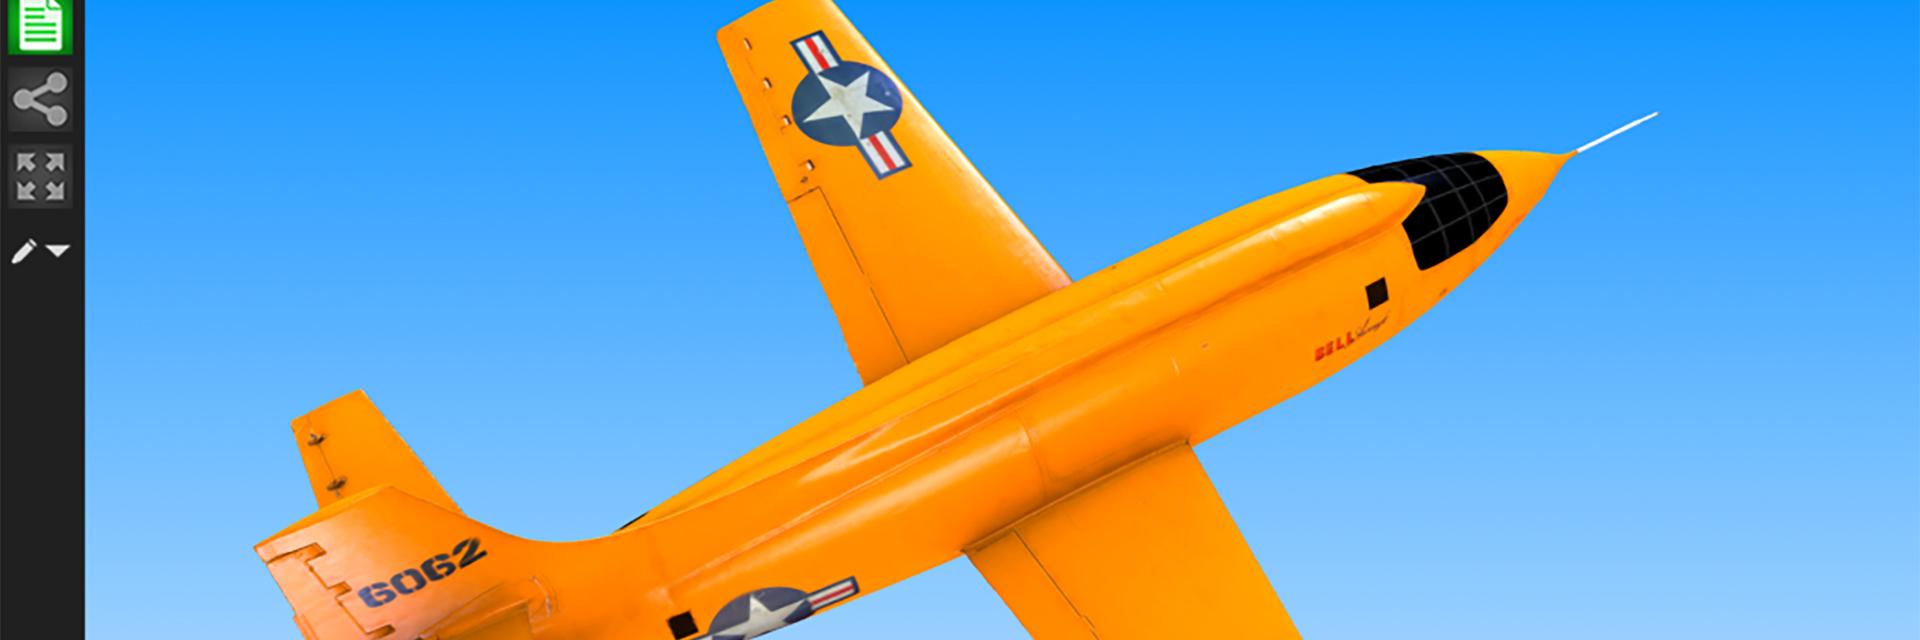 Bell X-1 in 3D